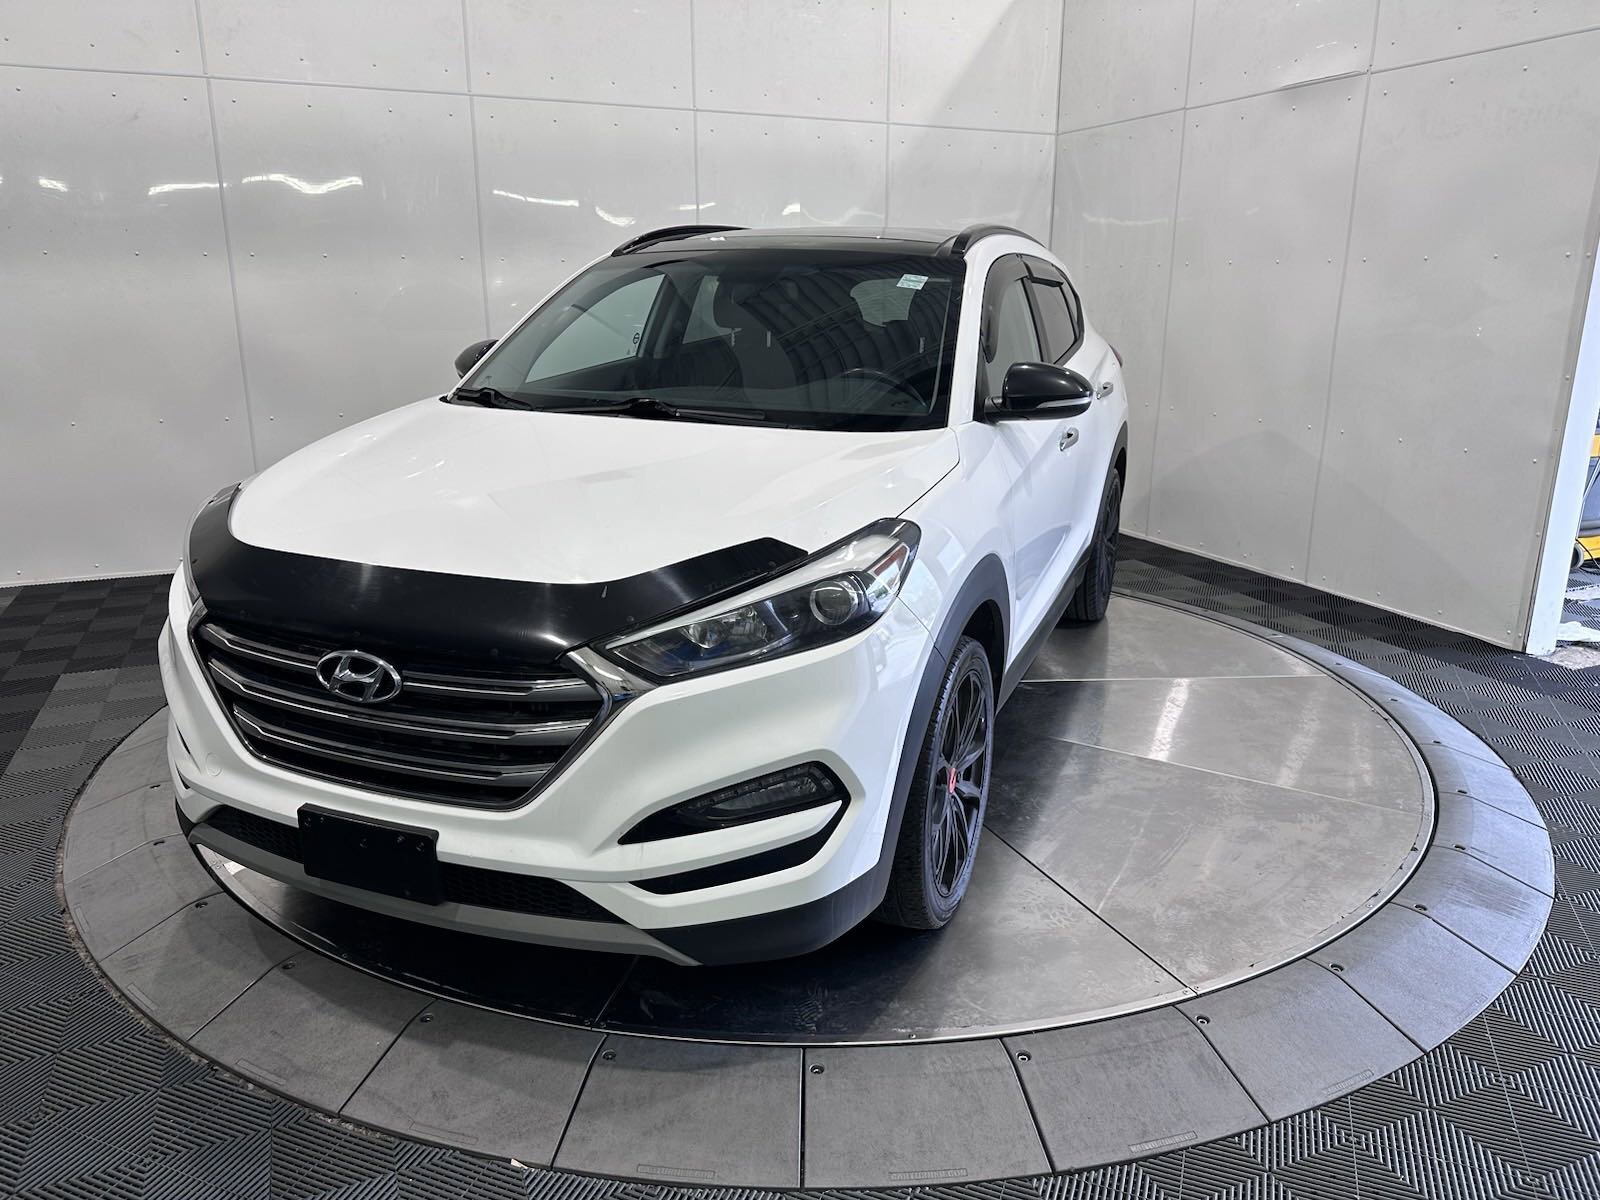 2018 Hyundai Tucson Noir I Pano Sunroof I Reverse Cam